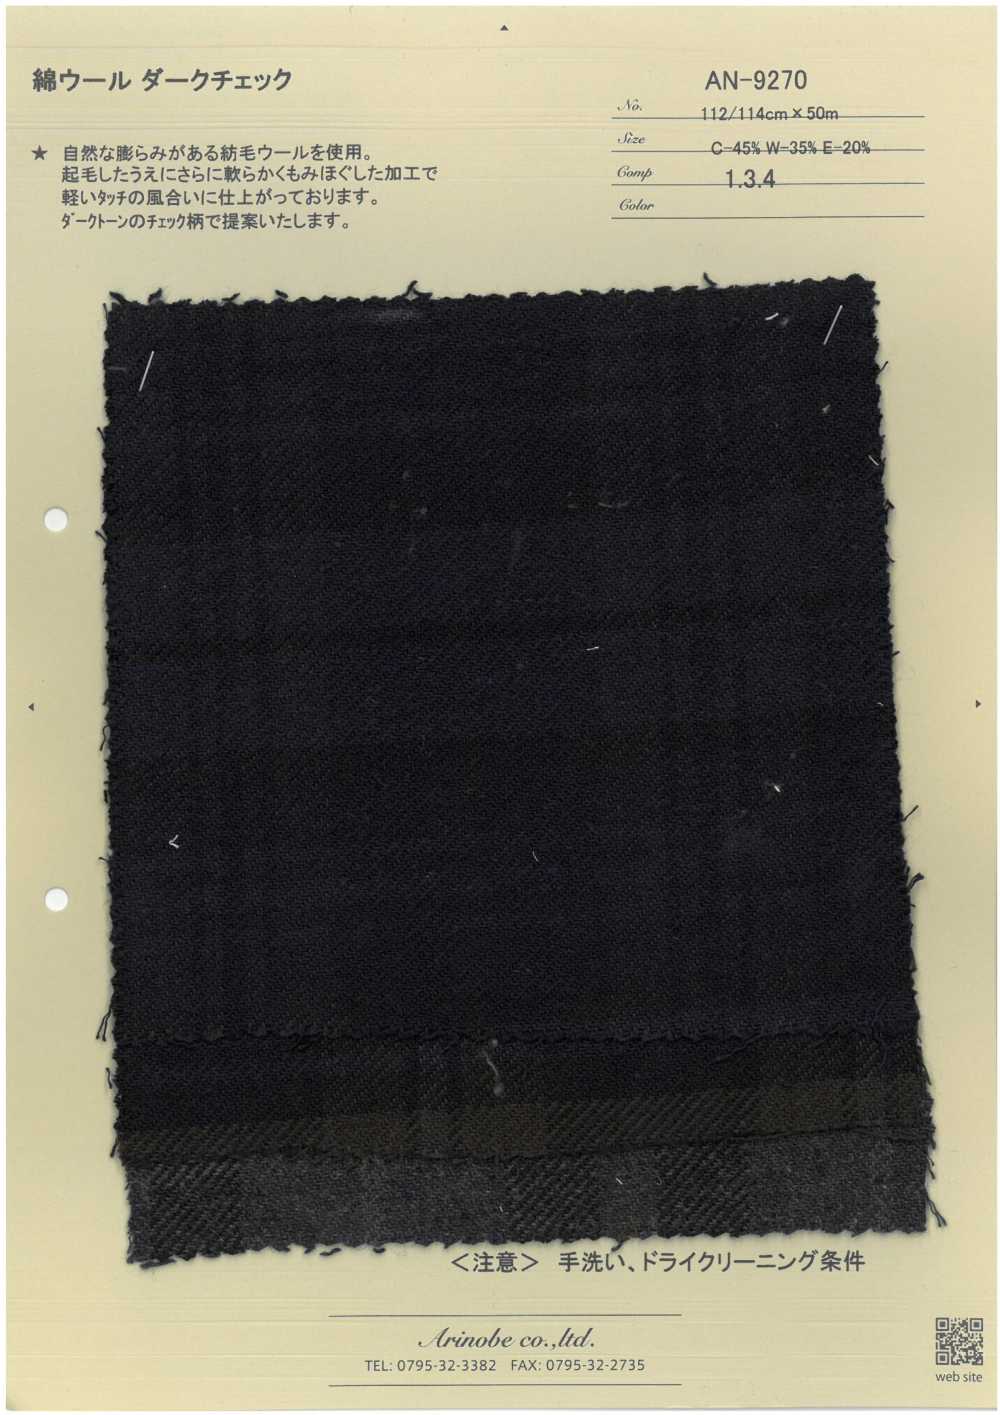 AN-9270 Cotton Wool Dark Check[Textile / Fabric] ARINOBE CO., LTD.